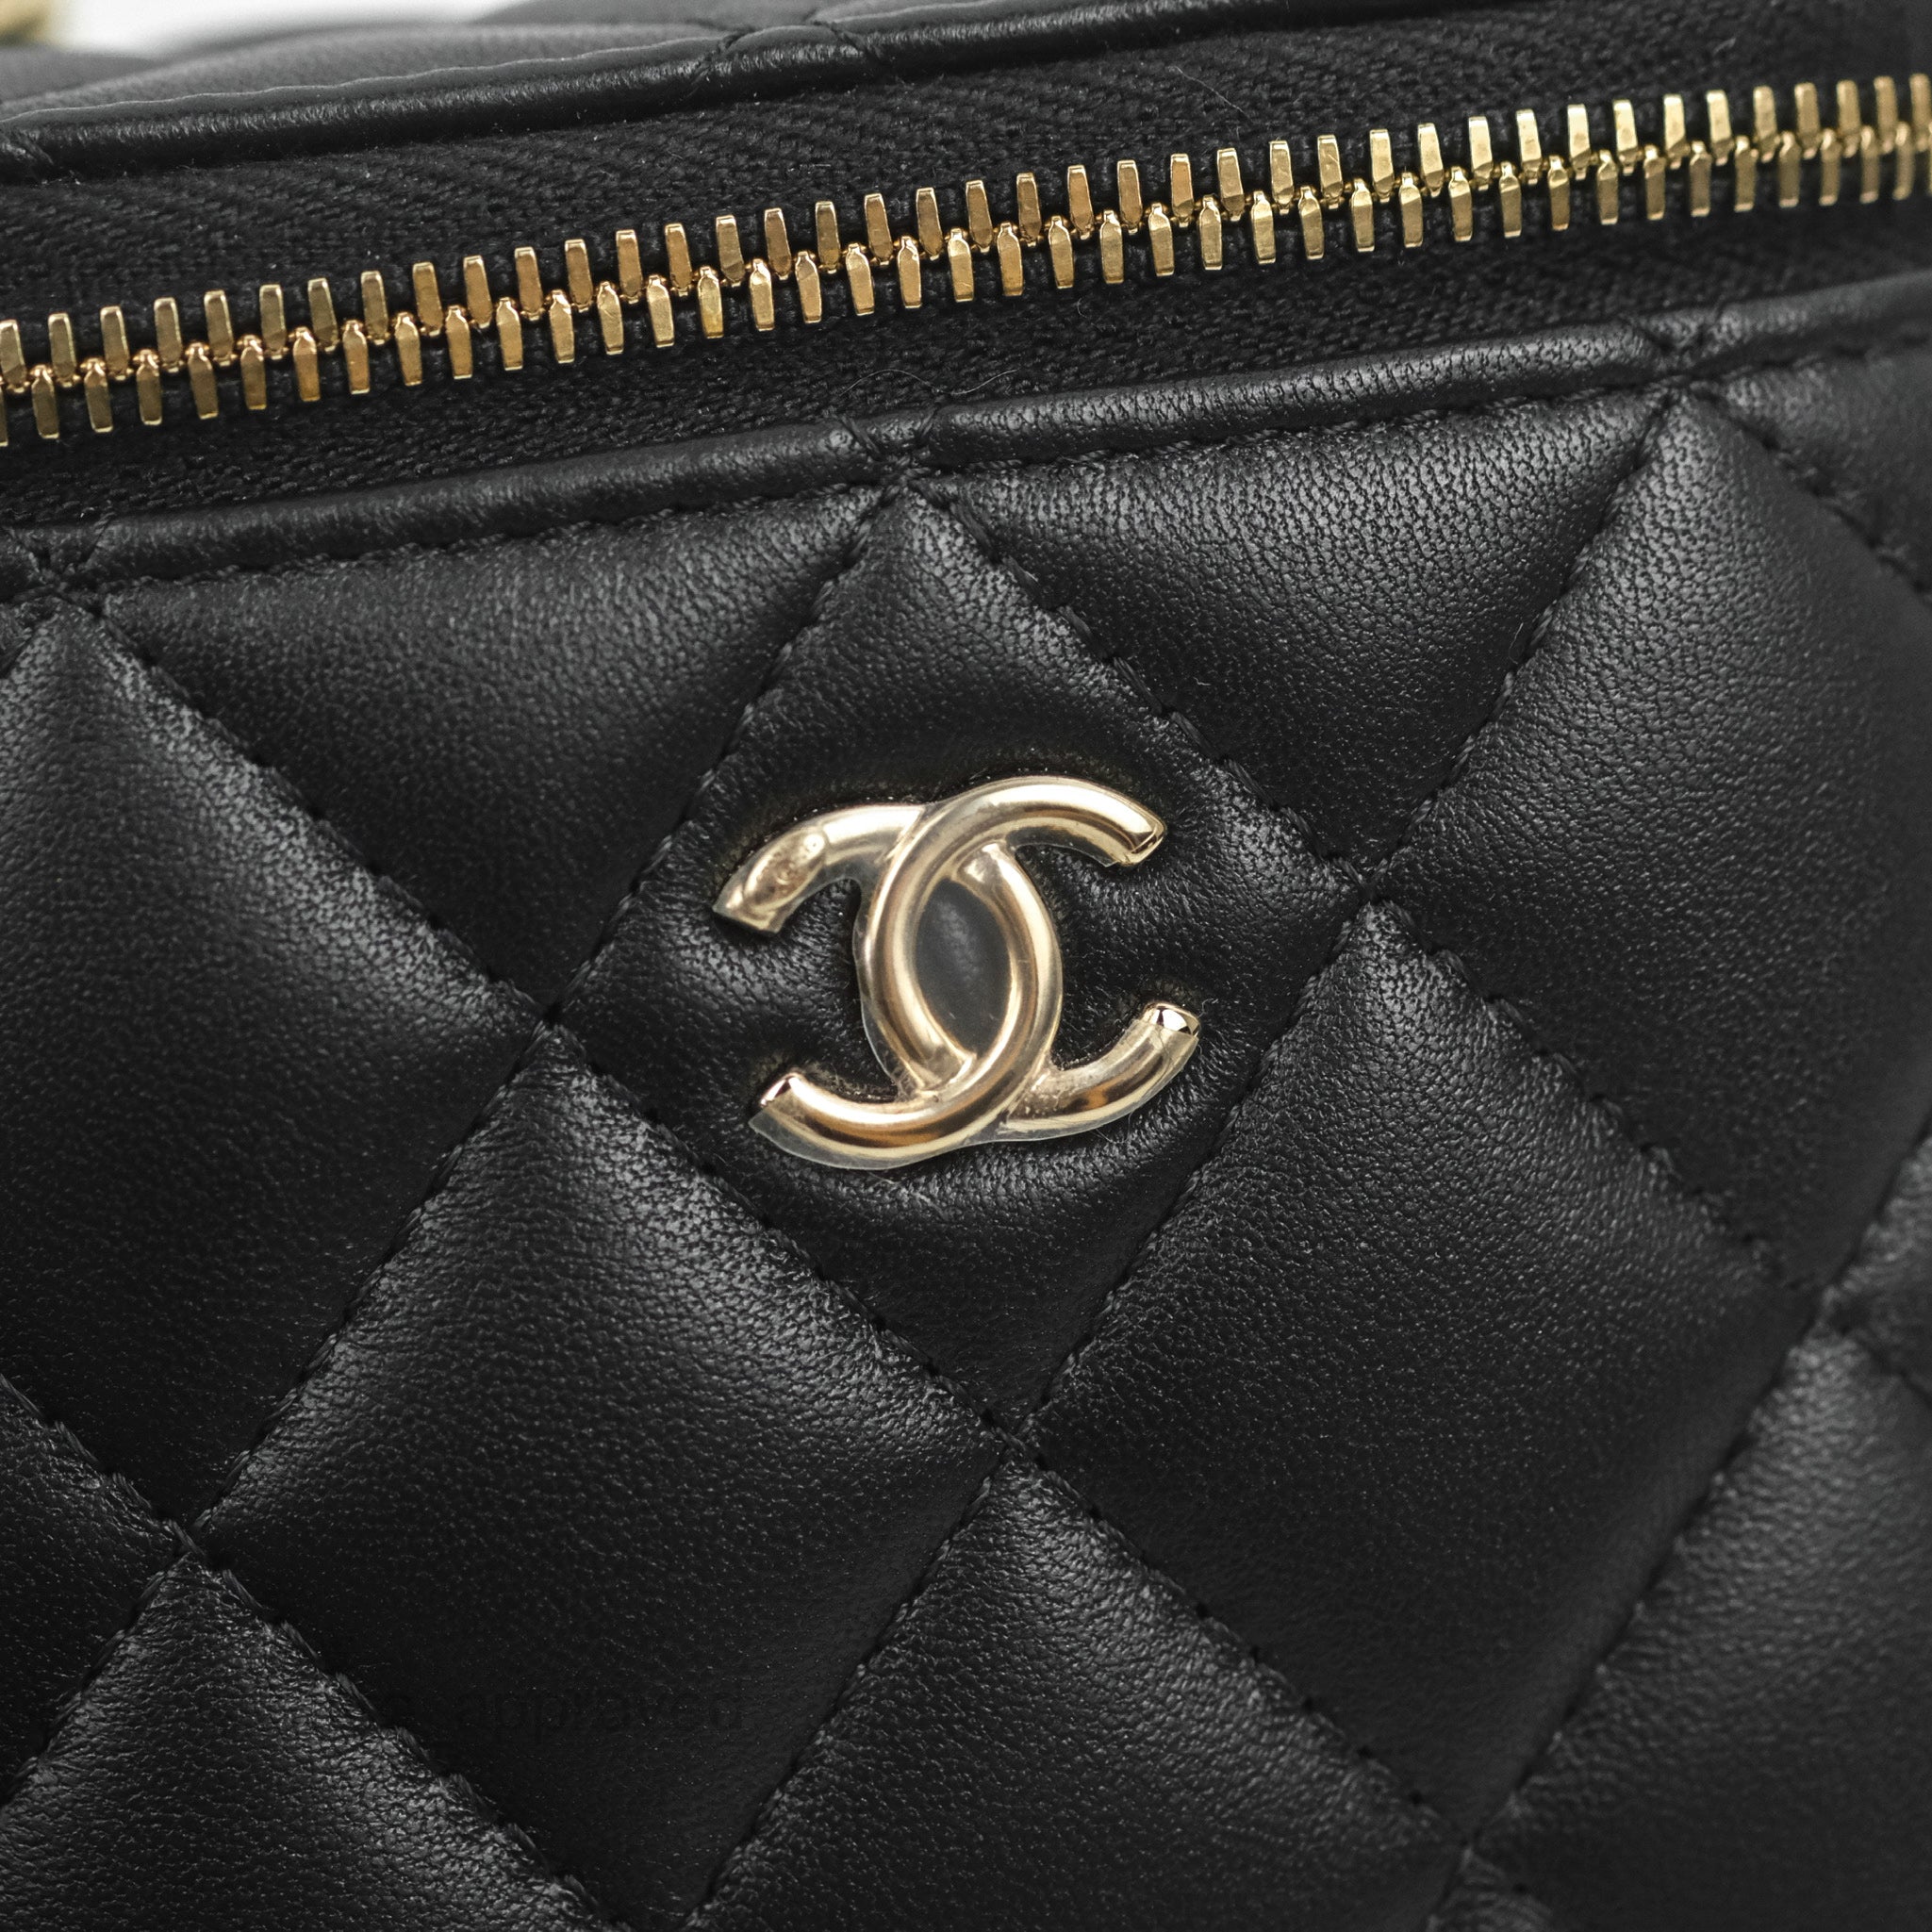 Chanel Mini Top Handle Vanity With Chain Ecru/Beige Lambskin Gold